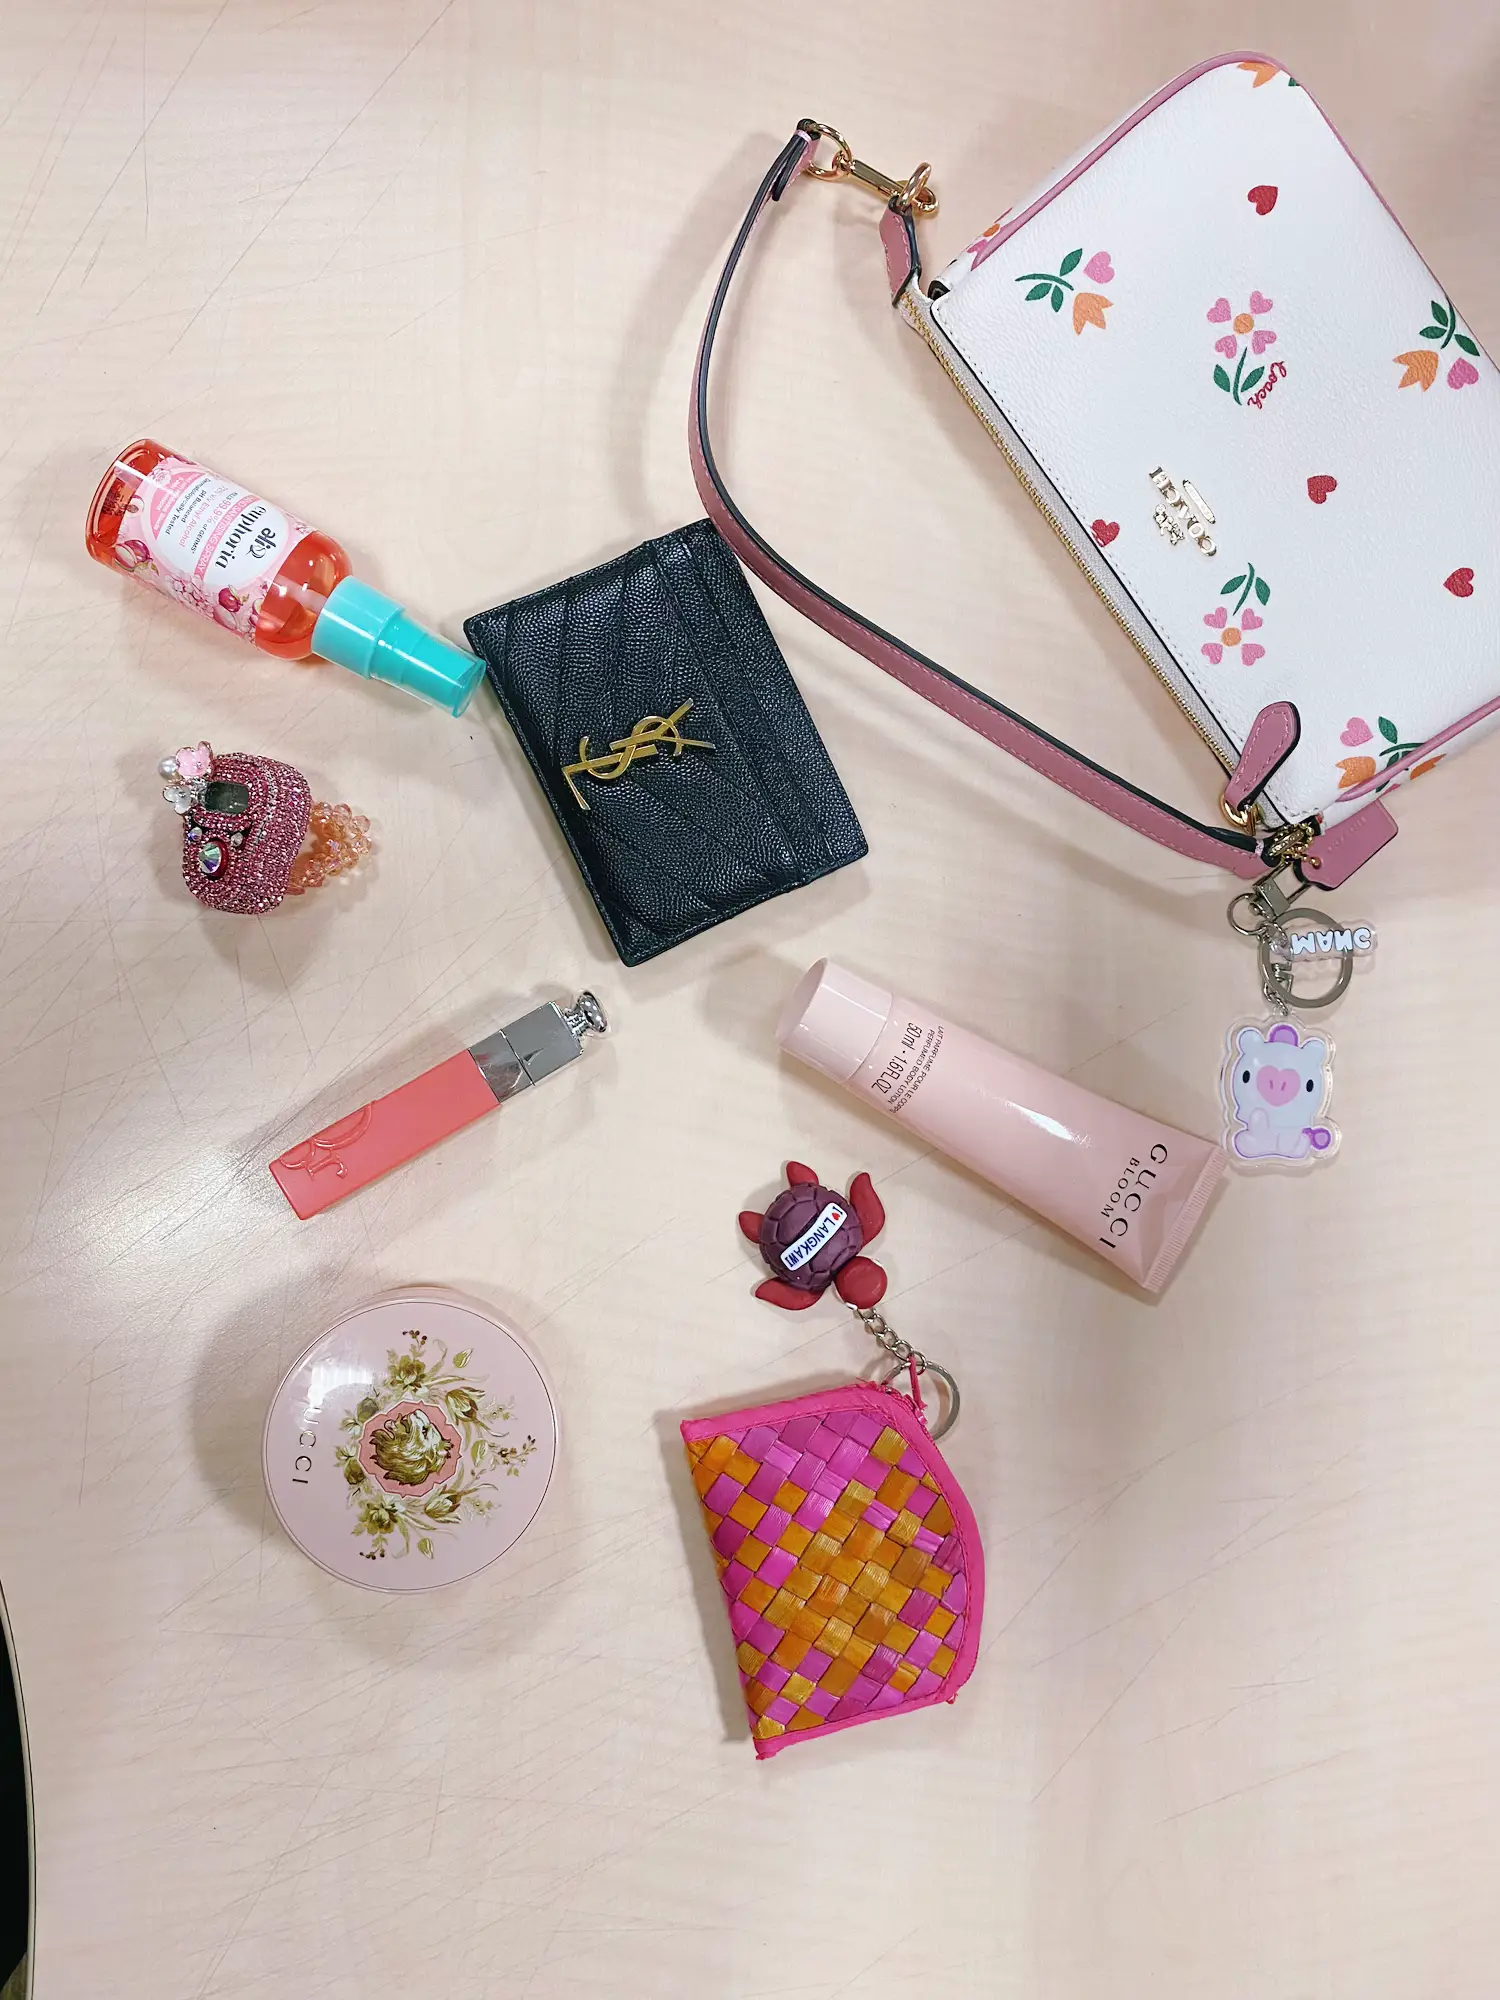 suzuka on Instagram: Things in my bag ❤︎ #mybag #mybags #whatsinmybag